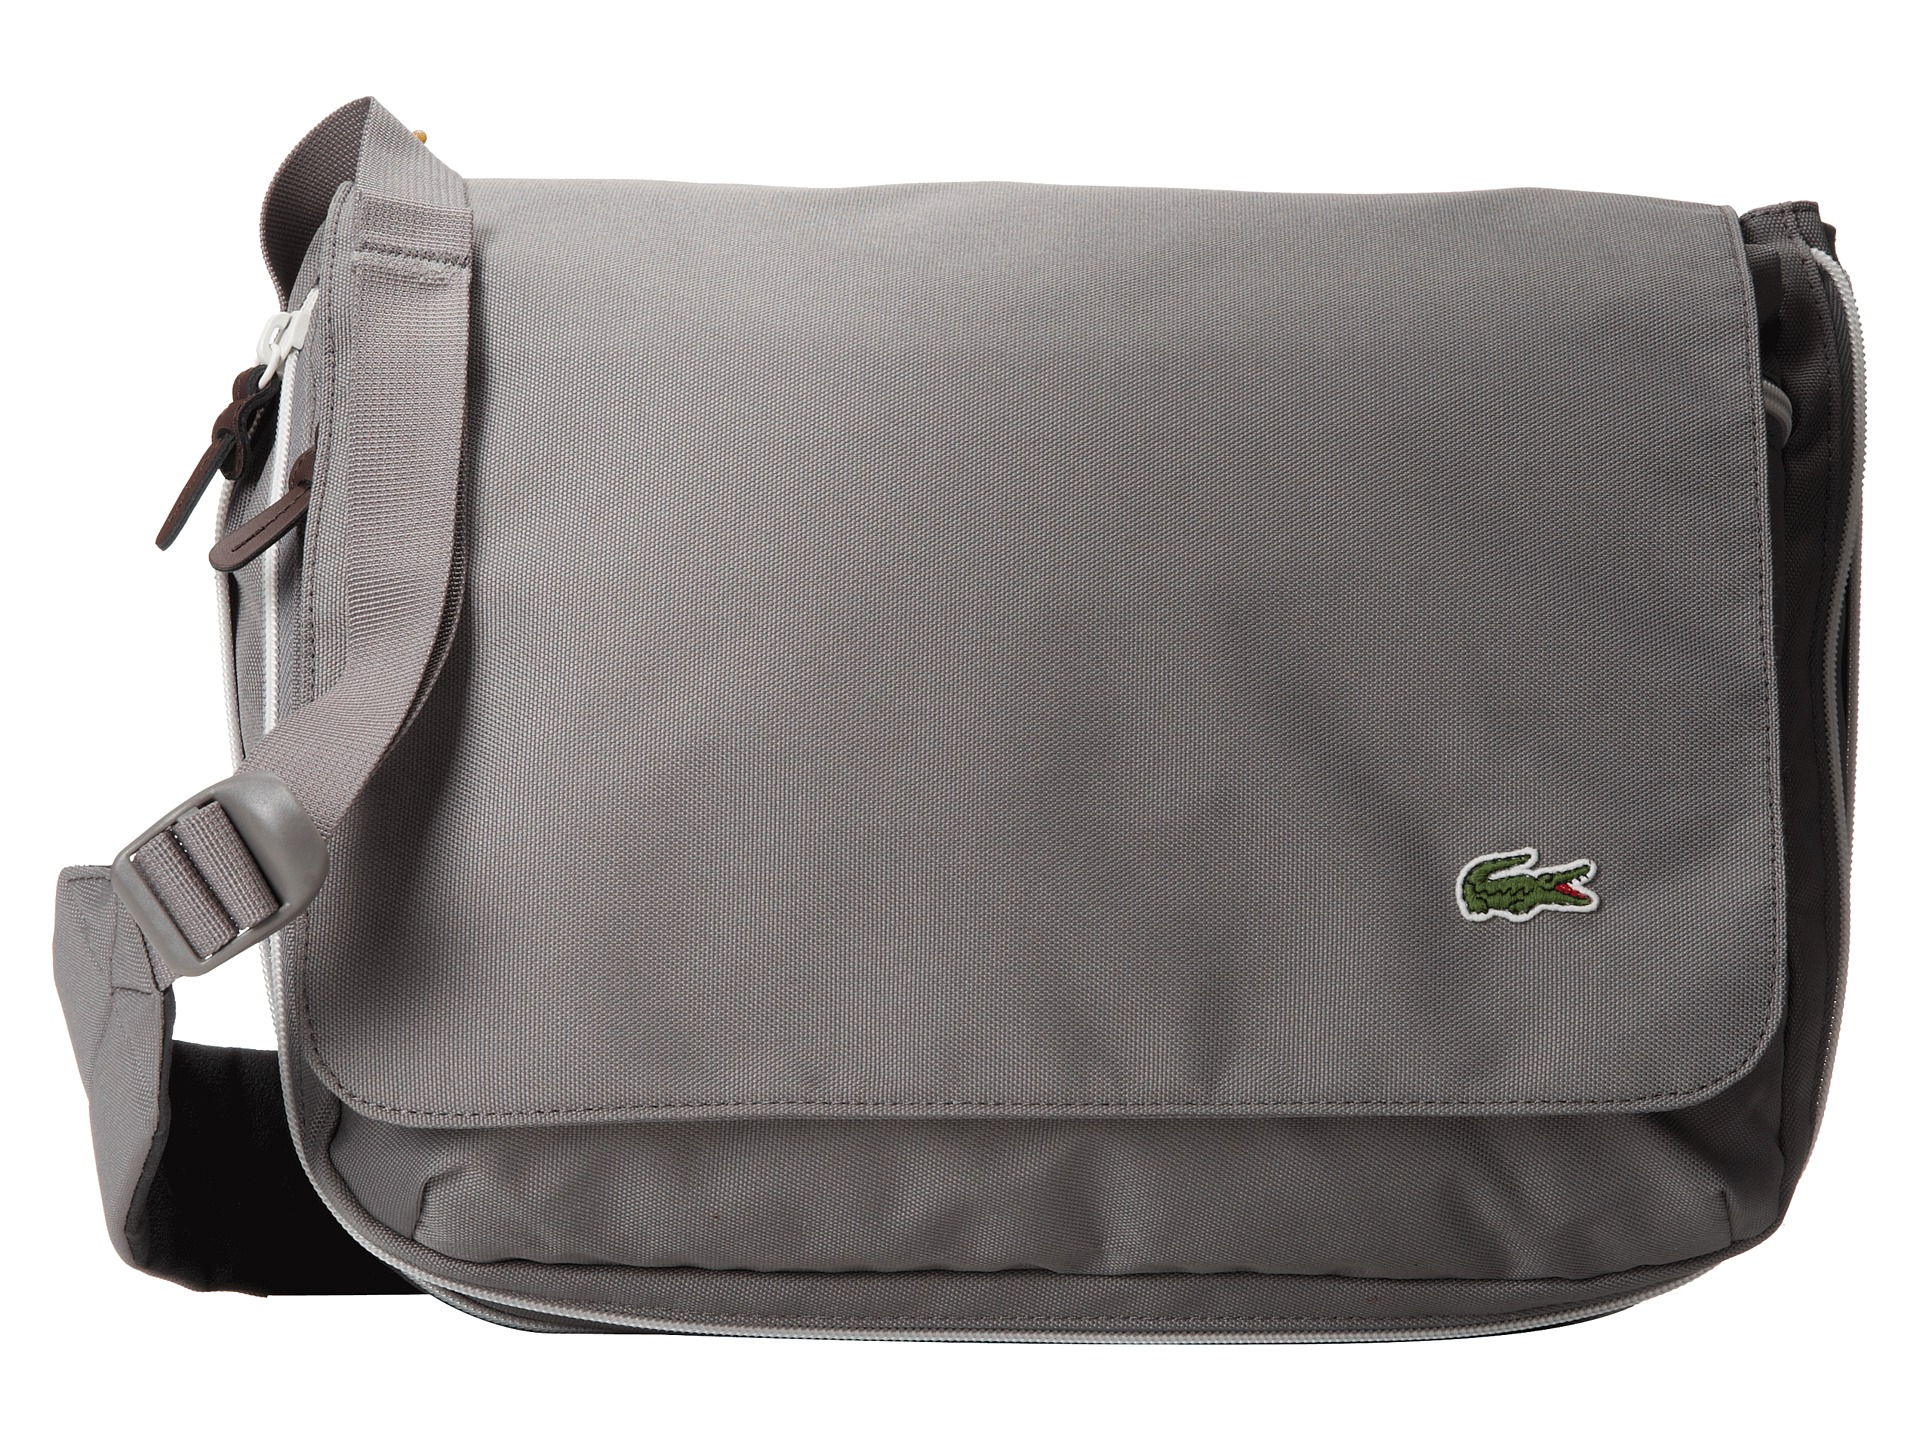 Lacoste Messenger Bags Flash Sales, 52% OFF | www.ingeniovirtual.com